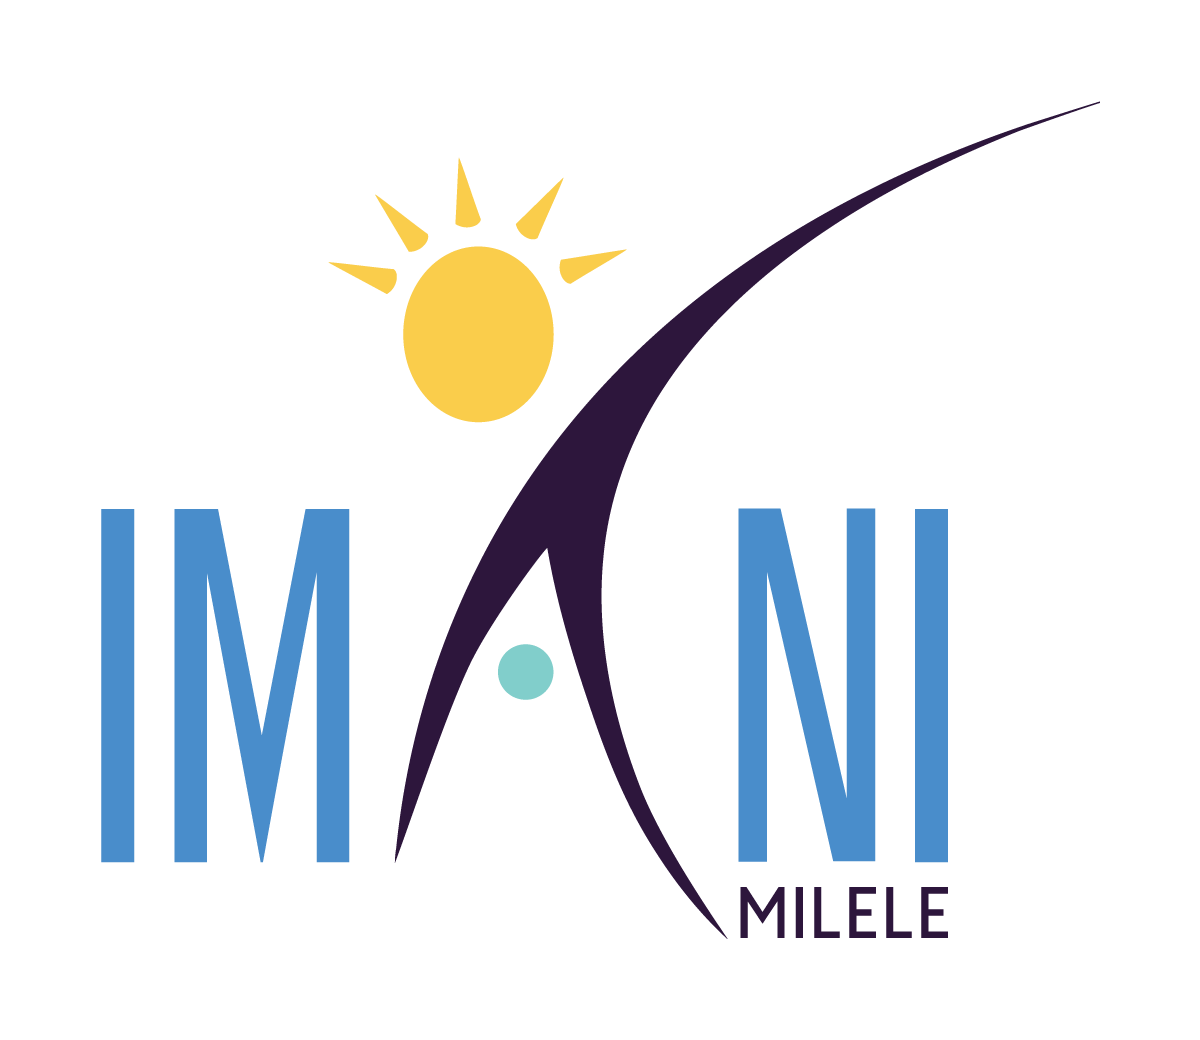 Imani Milele Logo